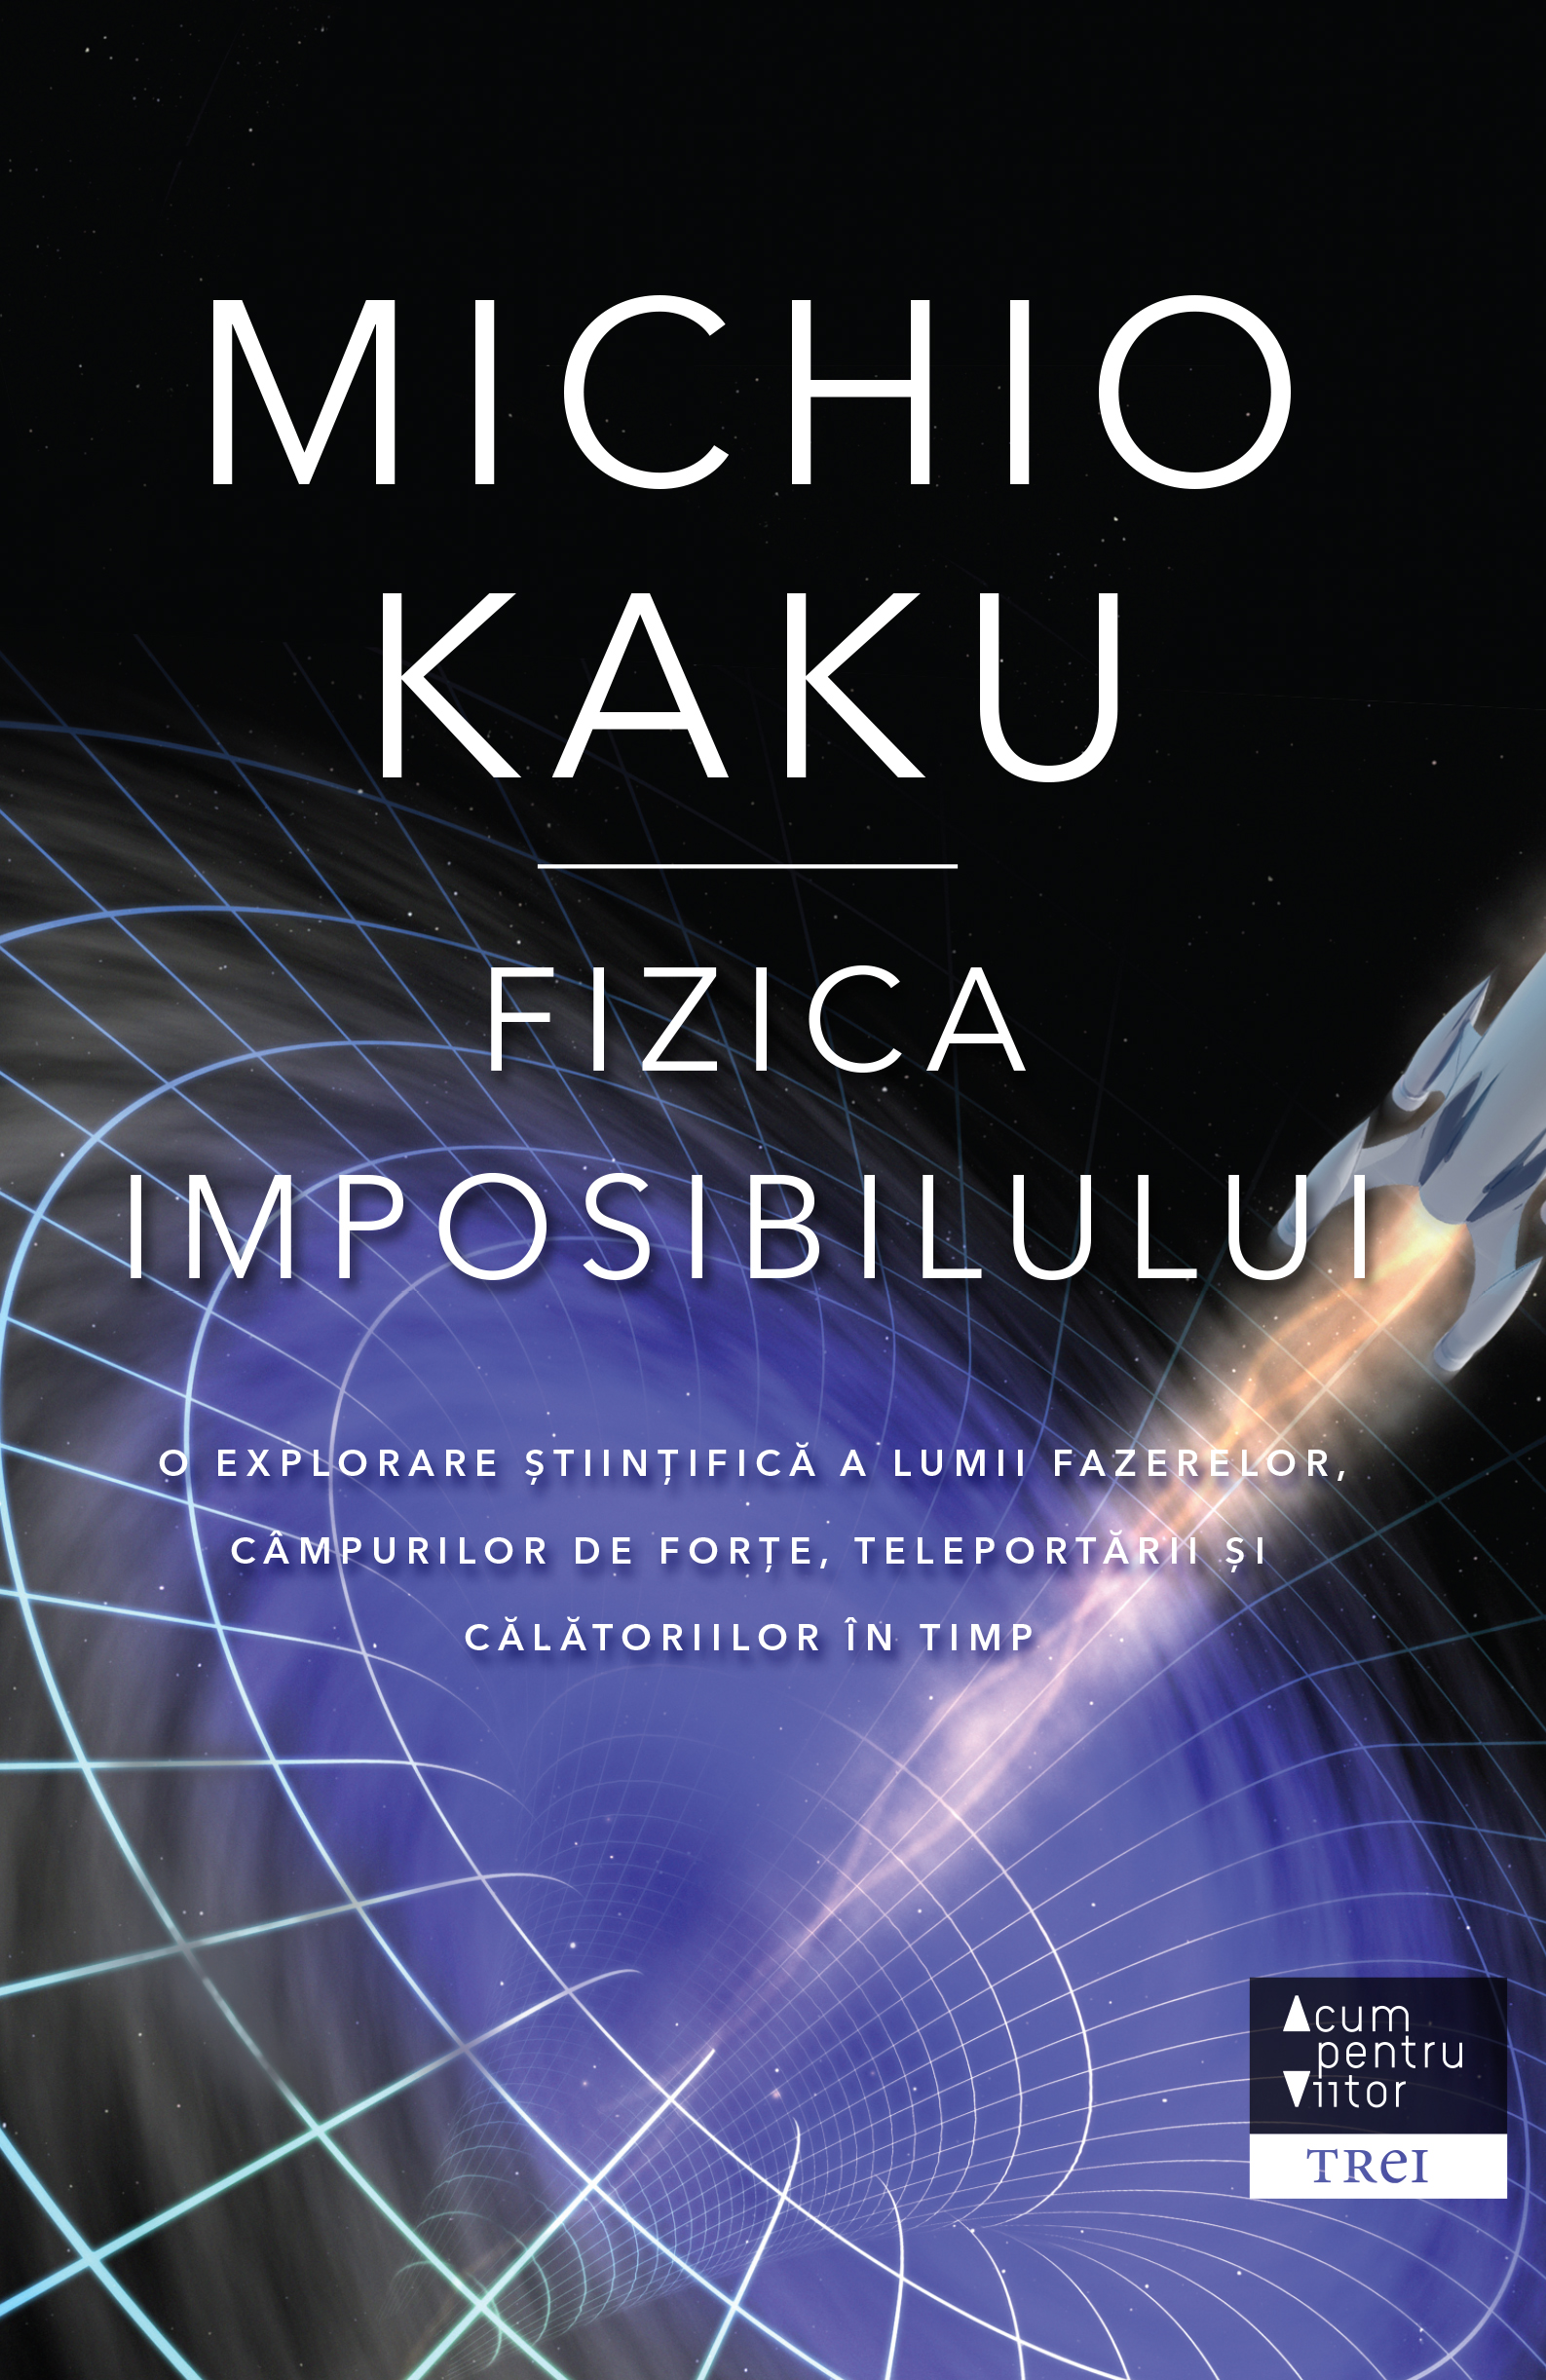 Fizica imposibilului | Michio Kaku carturesti.ro poza bestsellers.ro